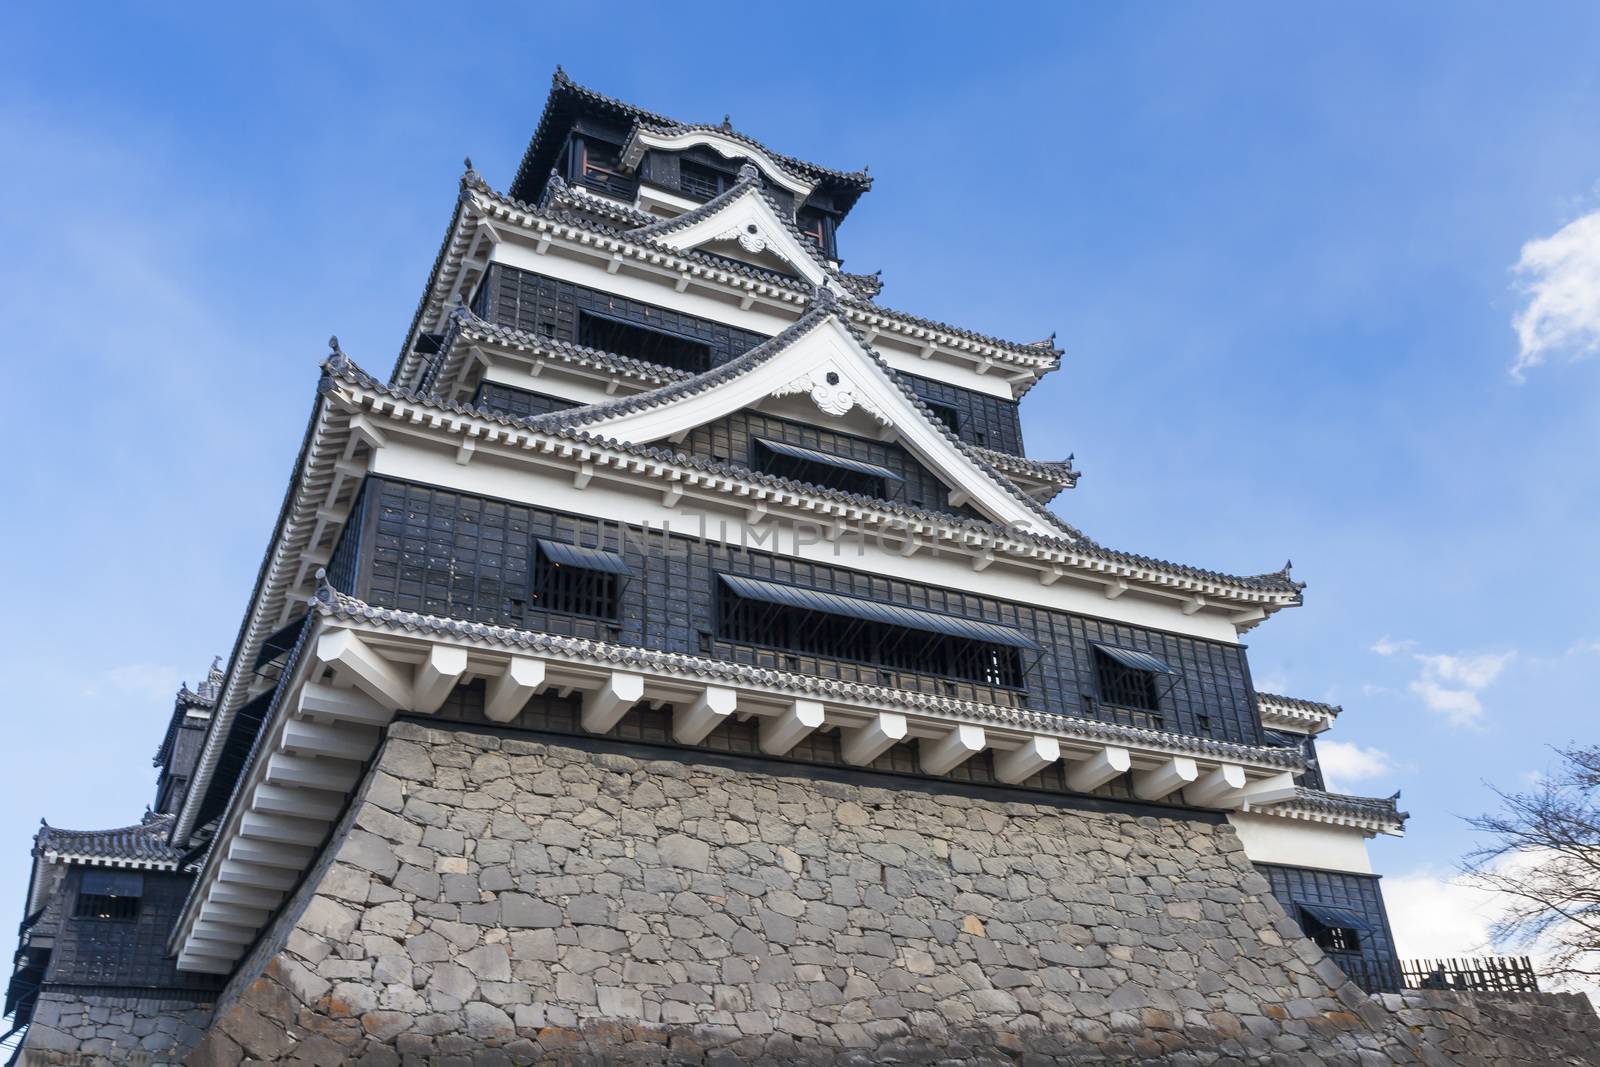 Ancient castle in Japan